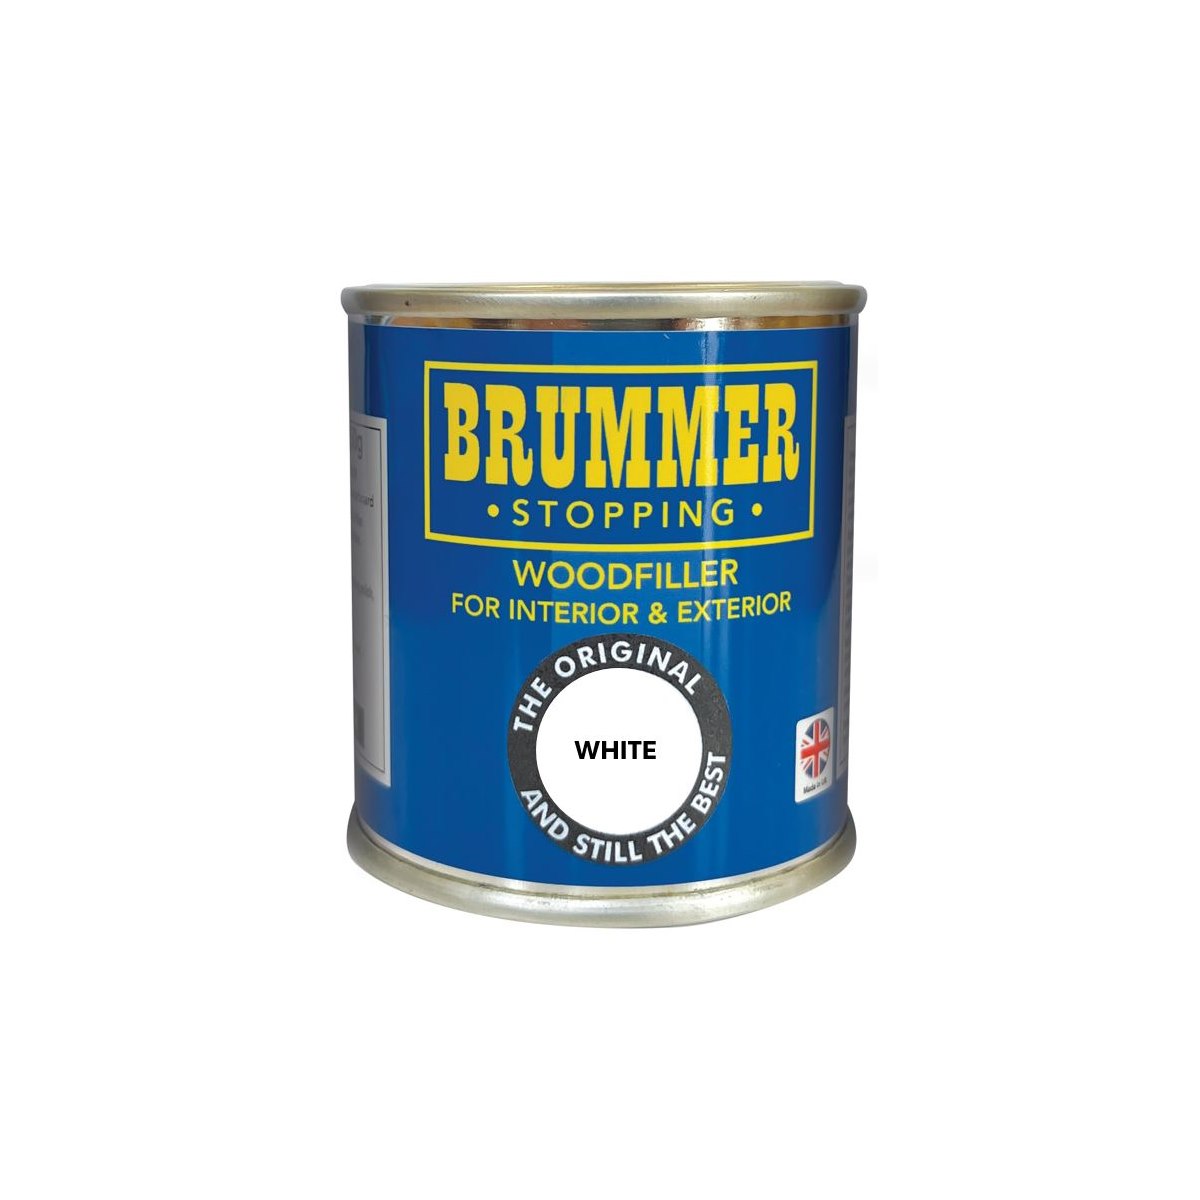 Brummer Woodfiller for Interior and Exteior Use White 700g